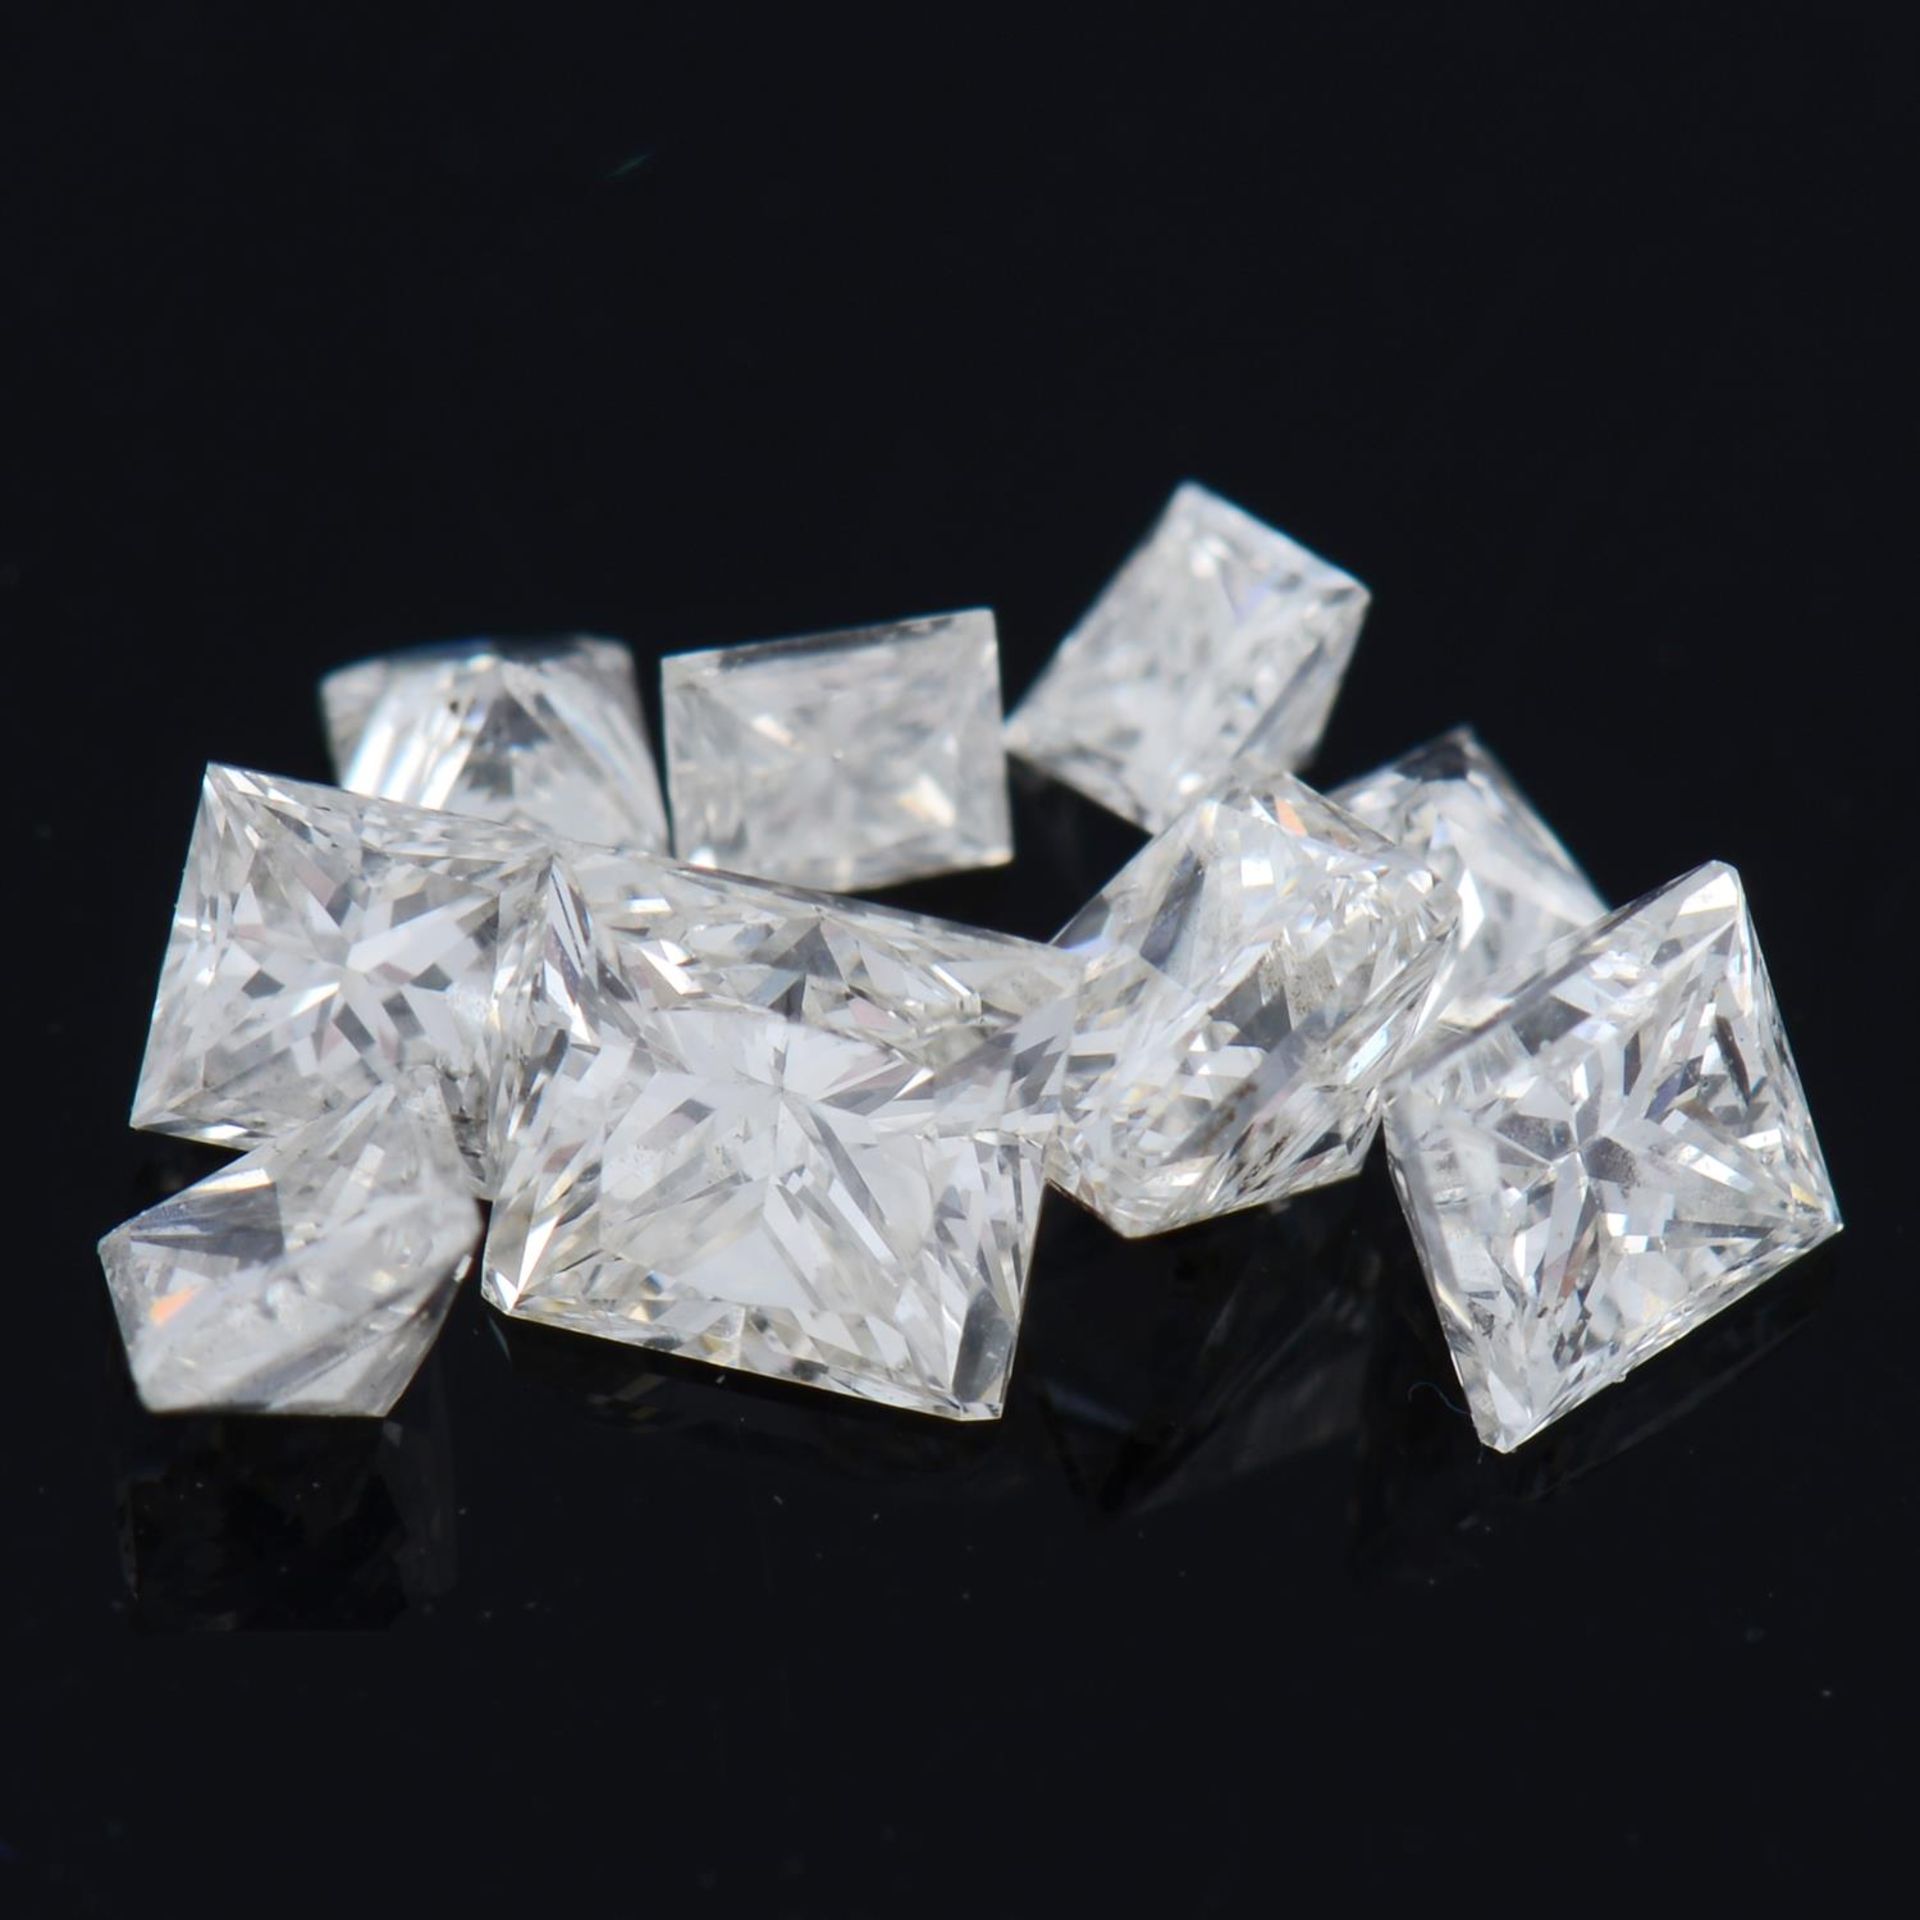 Assorted square-shape diamonds, 1.03ct